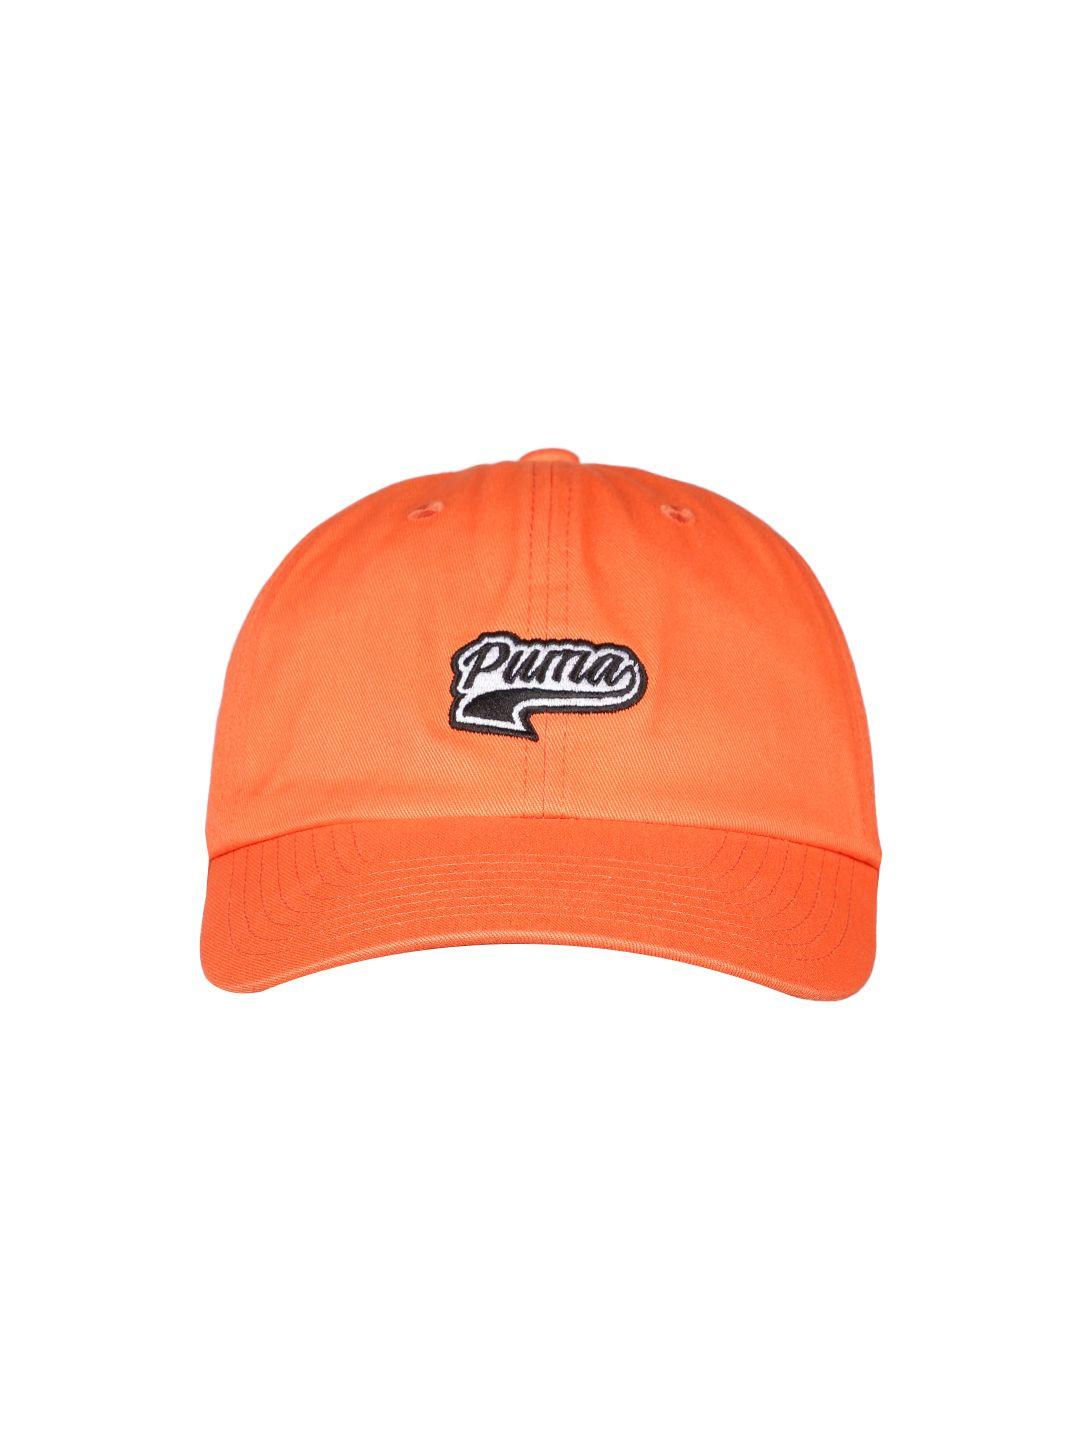 puma unisex script brand logo embroidered pure cotton baseball cap